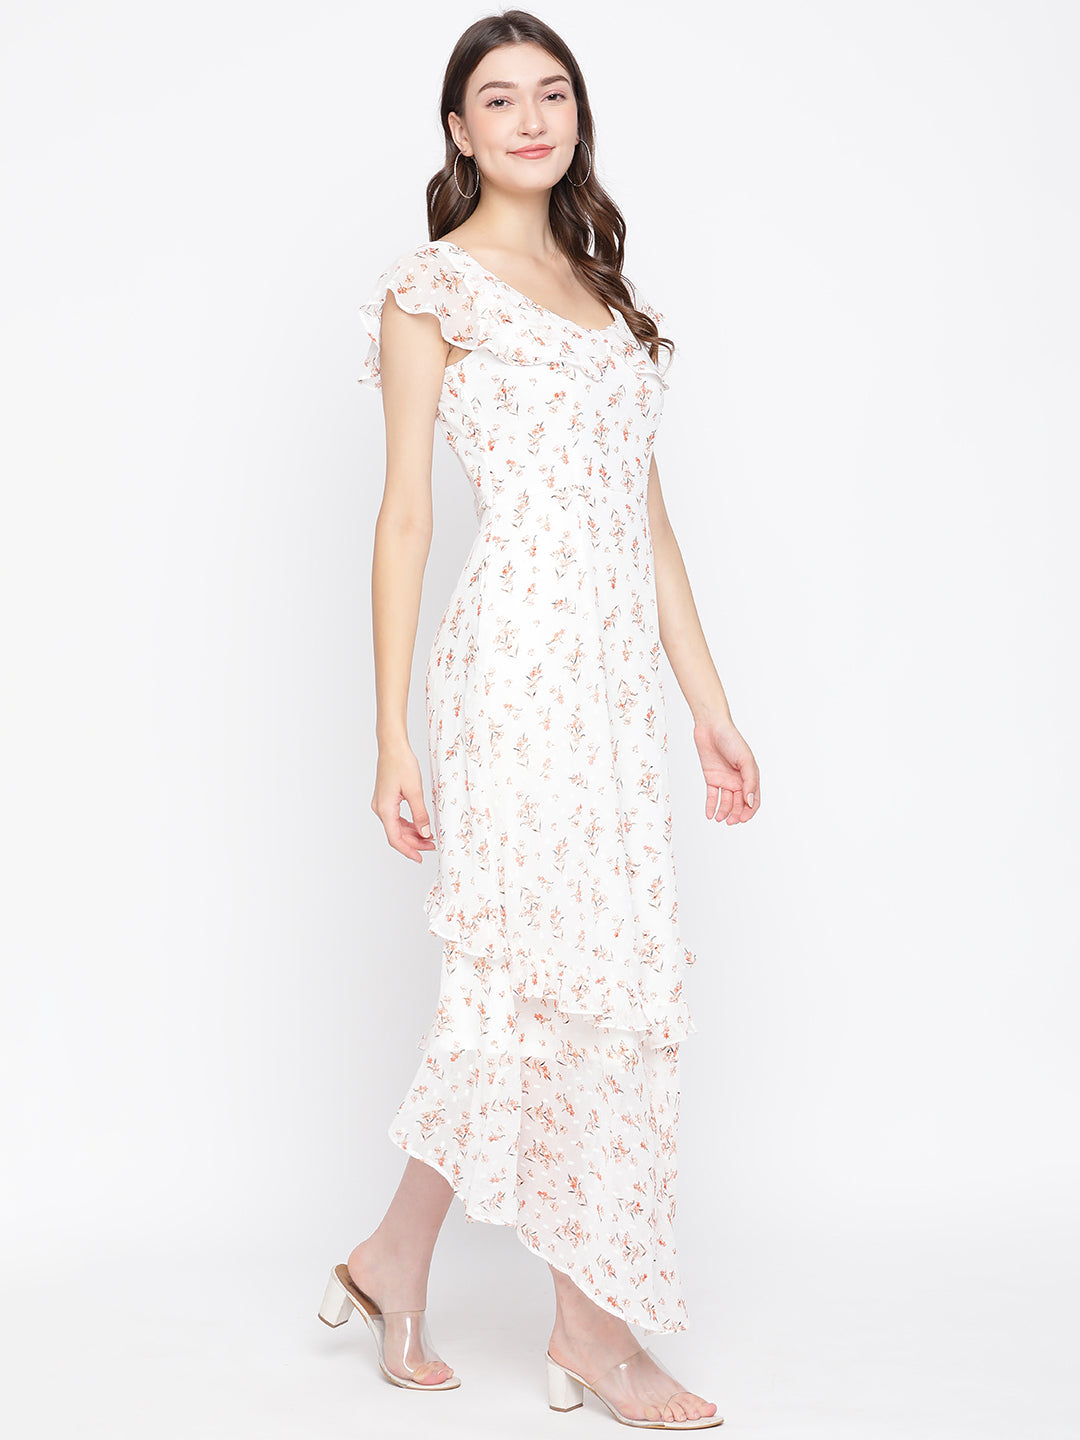 Ivory Cap Sleeve A-Line Dress